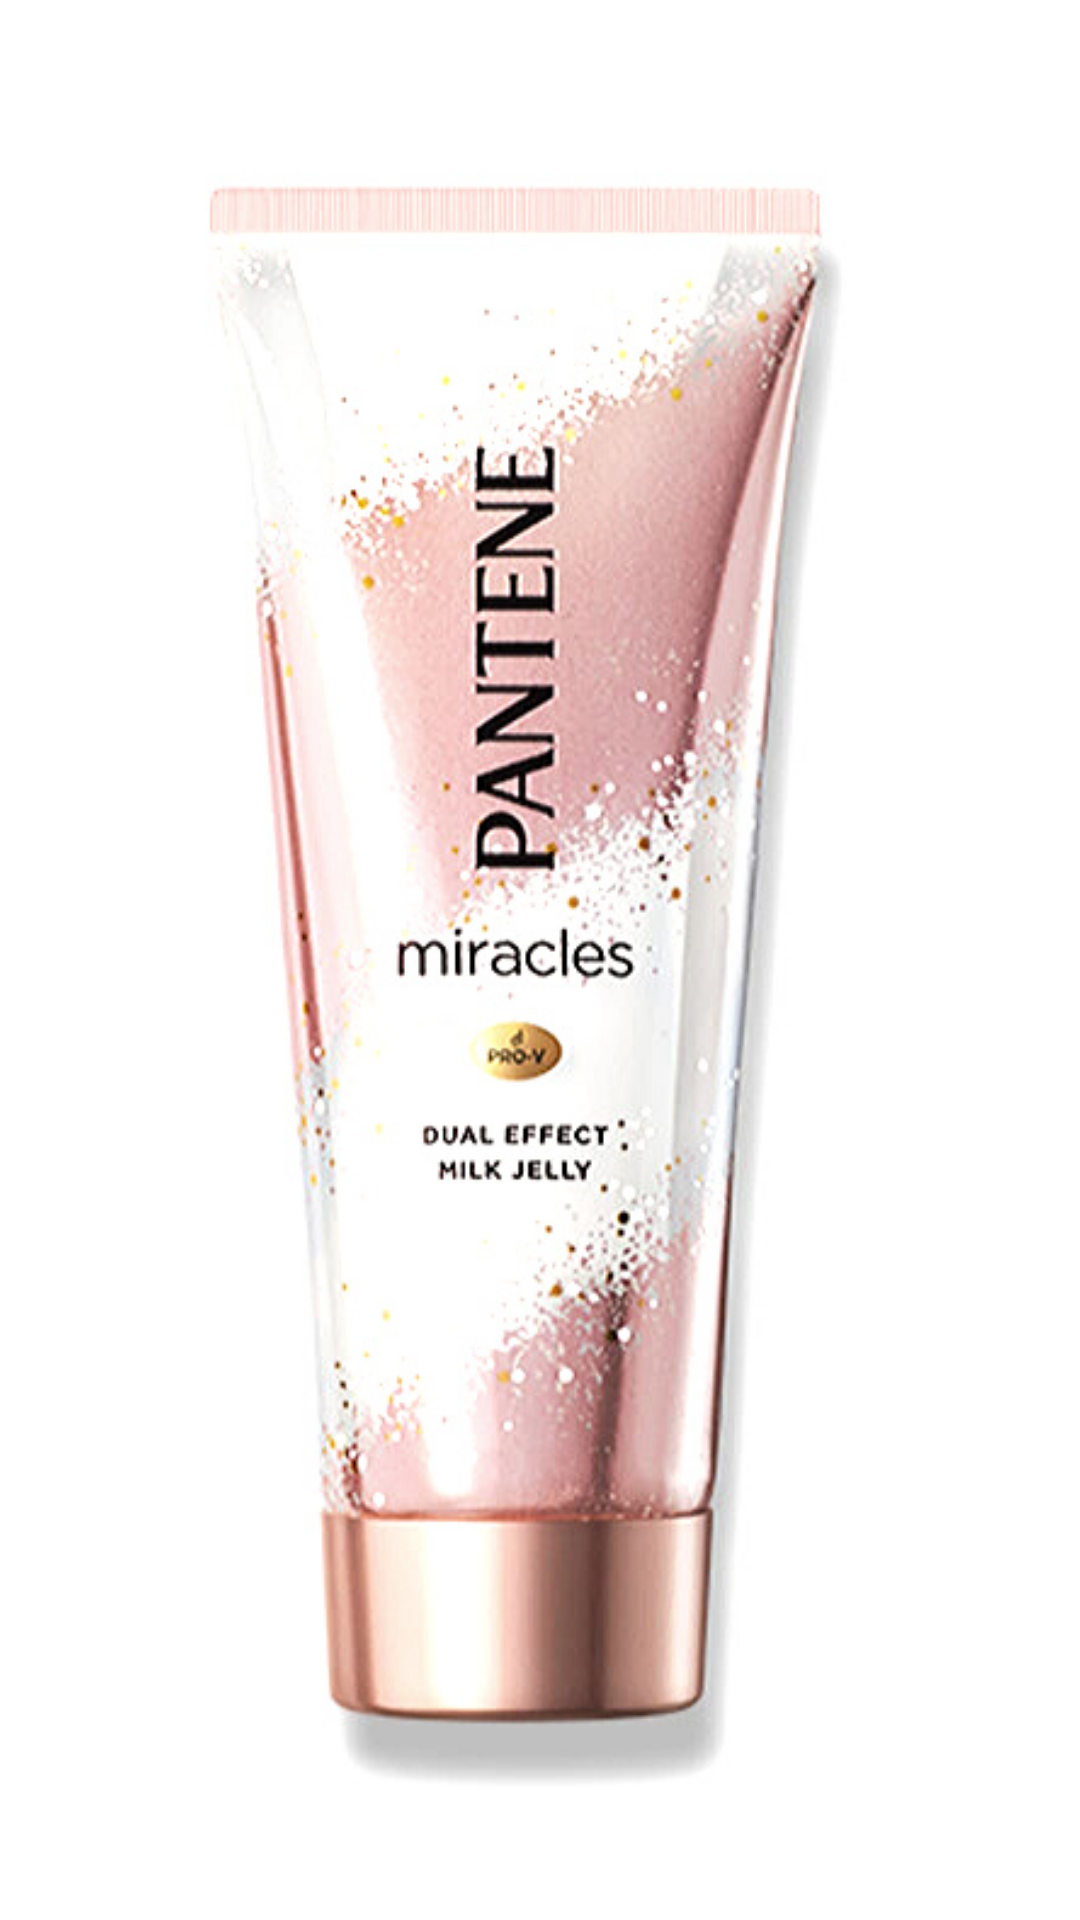 Pantene Miracles Dual Effect Milk Jelly